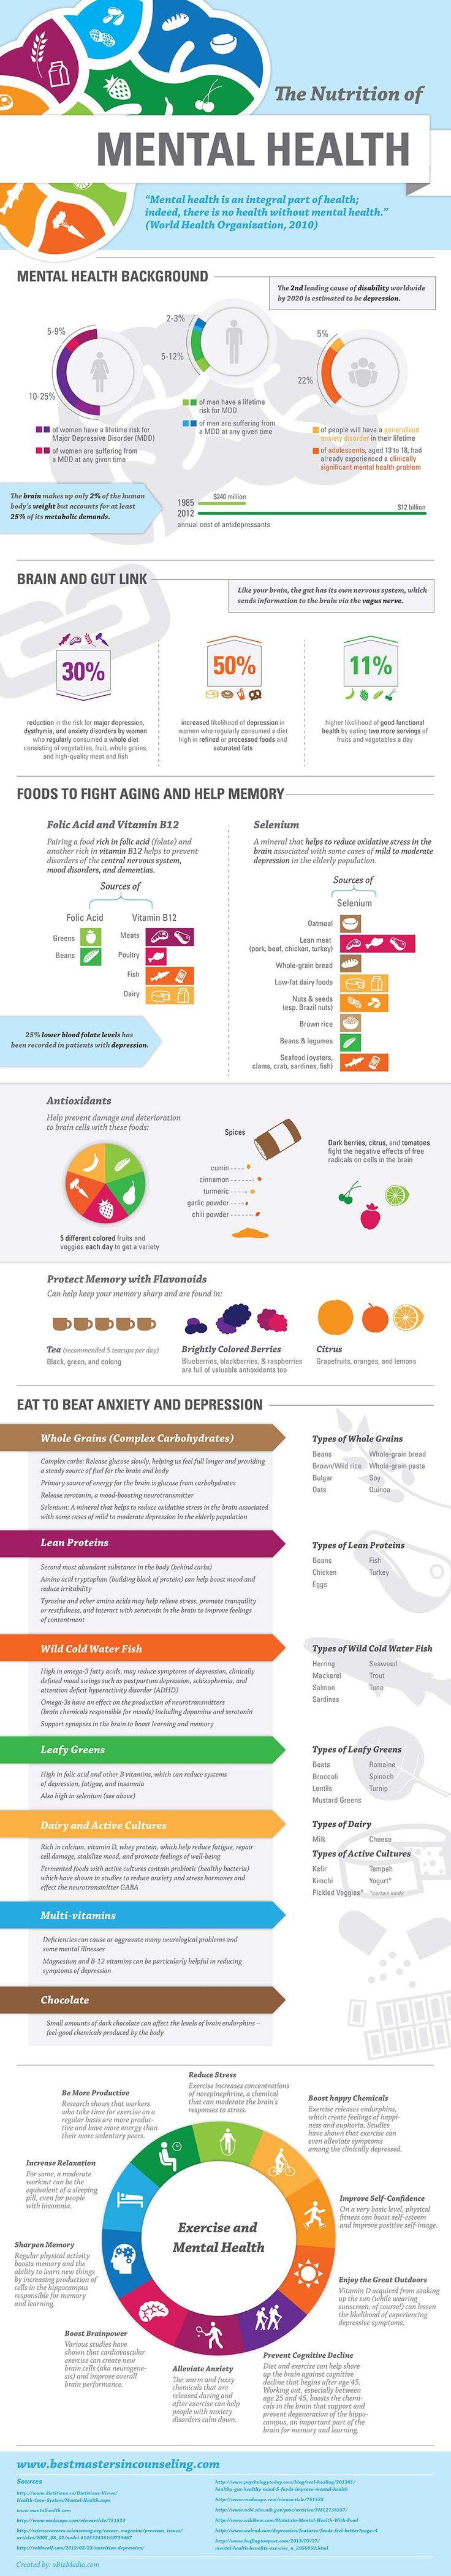 Свадьба - Infographic: Nutrition For Mental Health